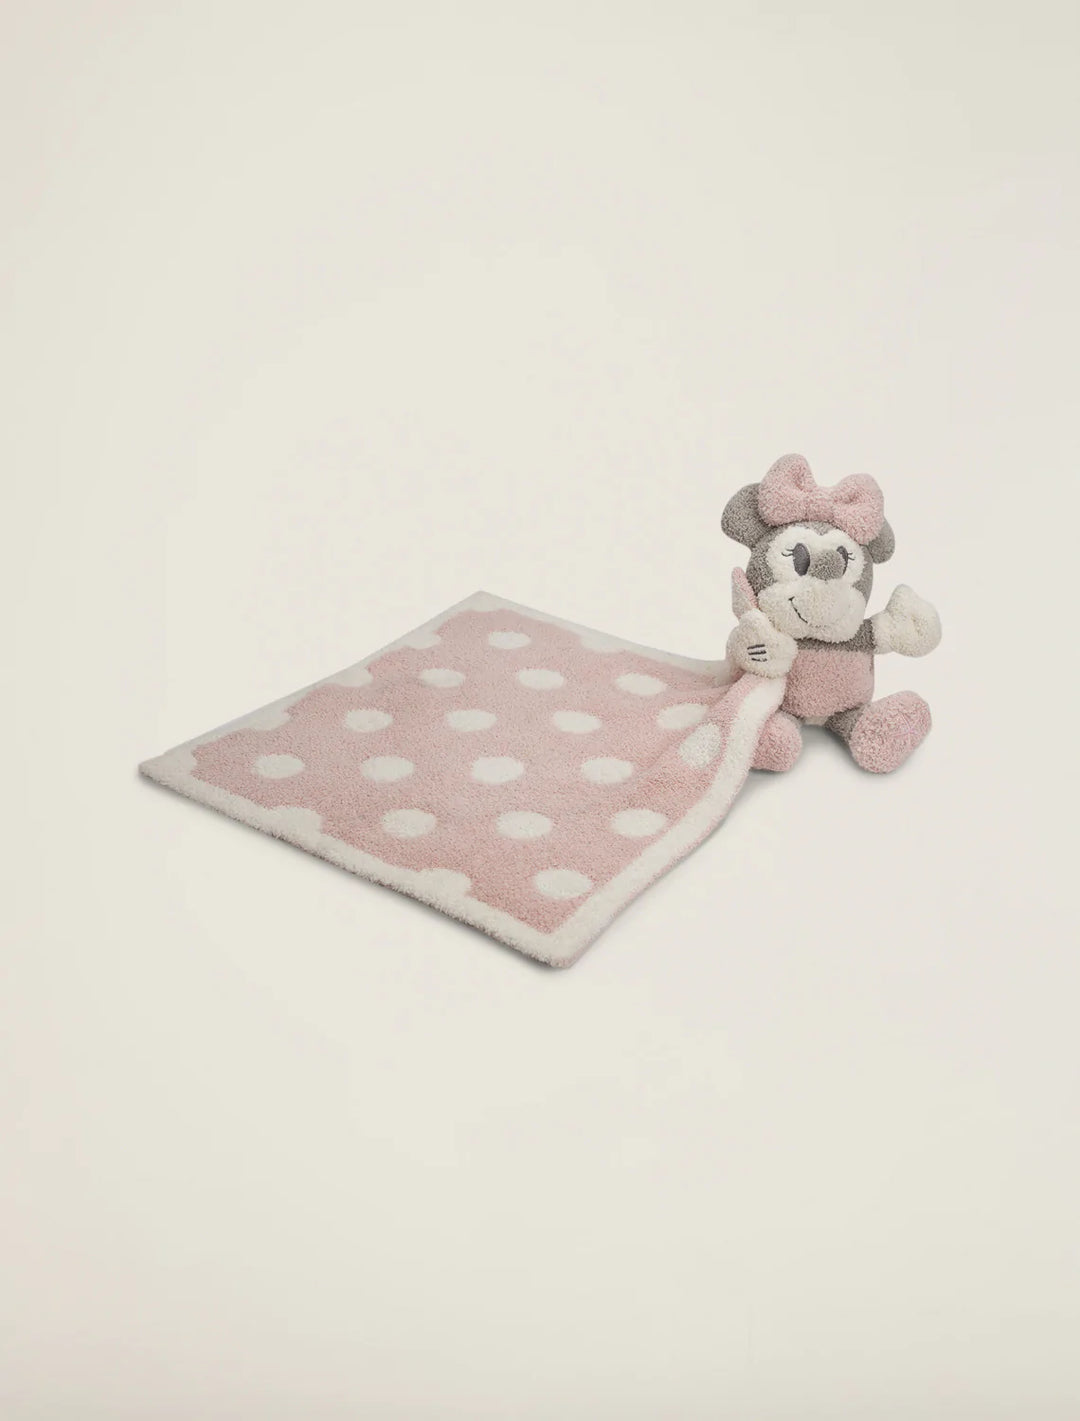 CozyChic® Vintage Disney Minnie Mouse Blanket Buddie